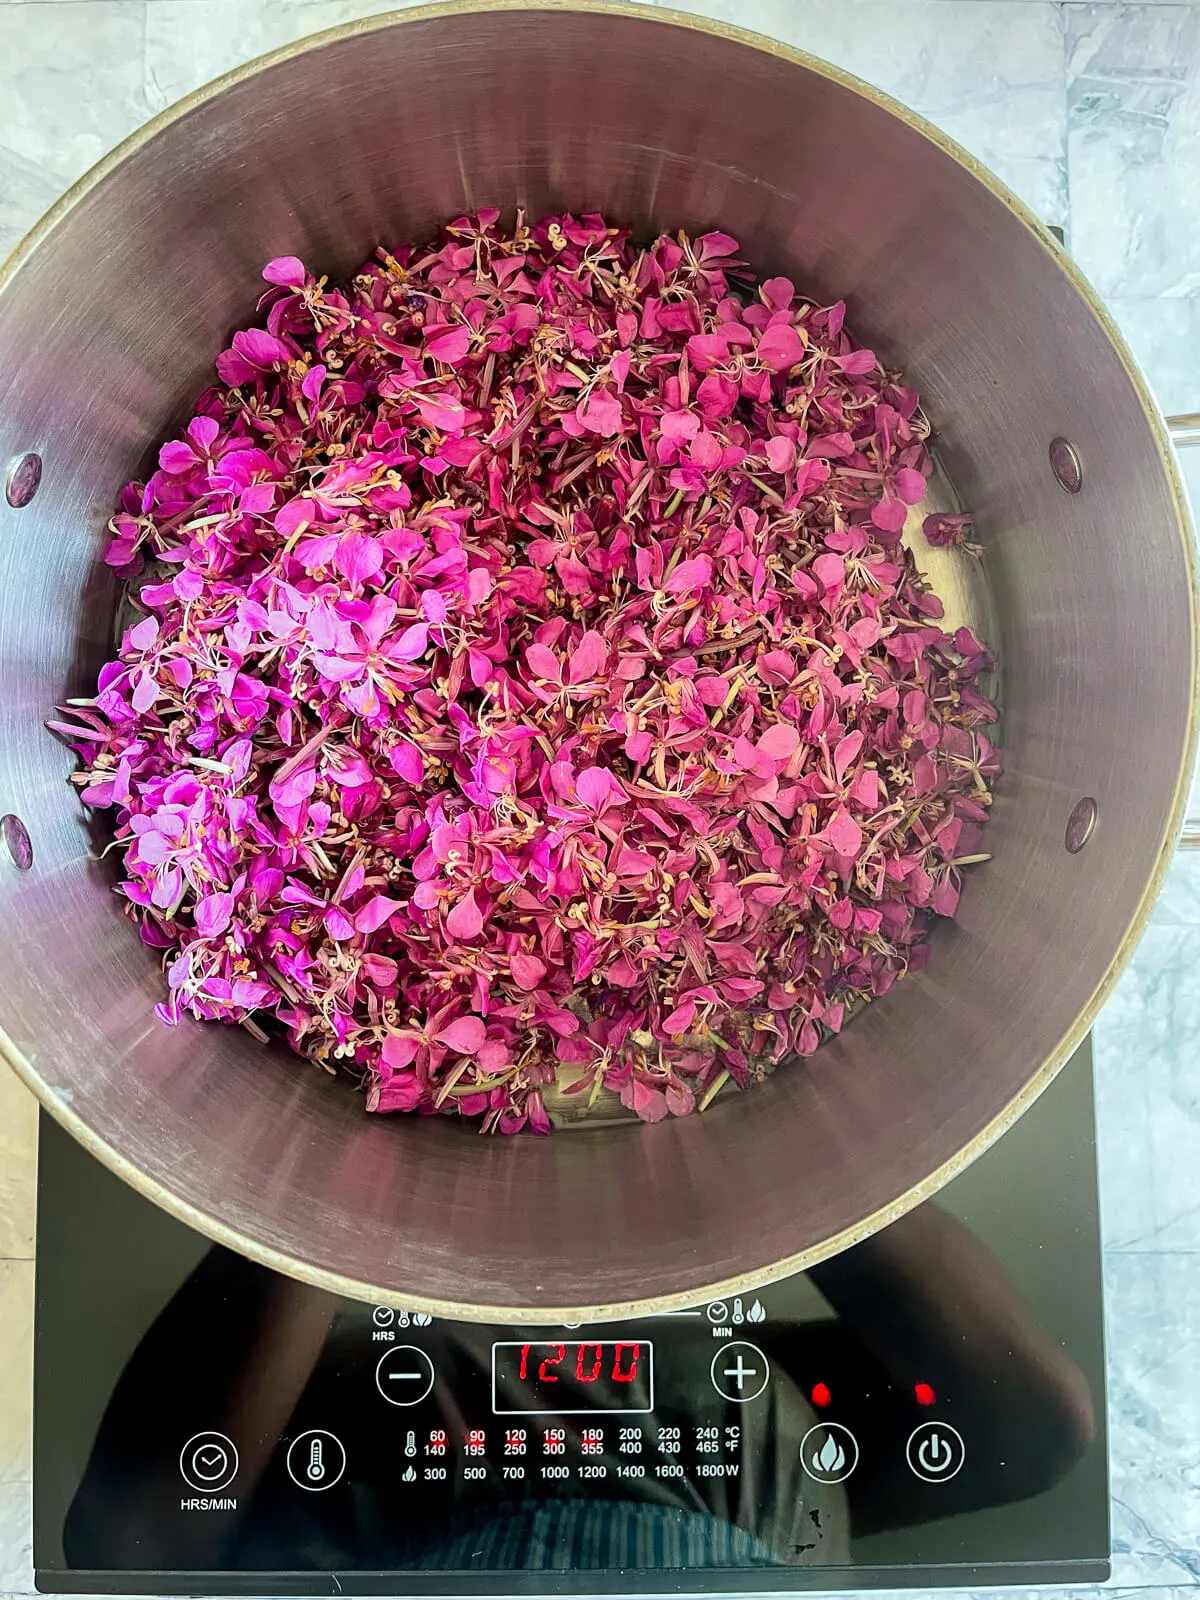 Pink willowherb flowers in a saucepan. 